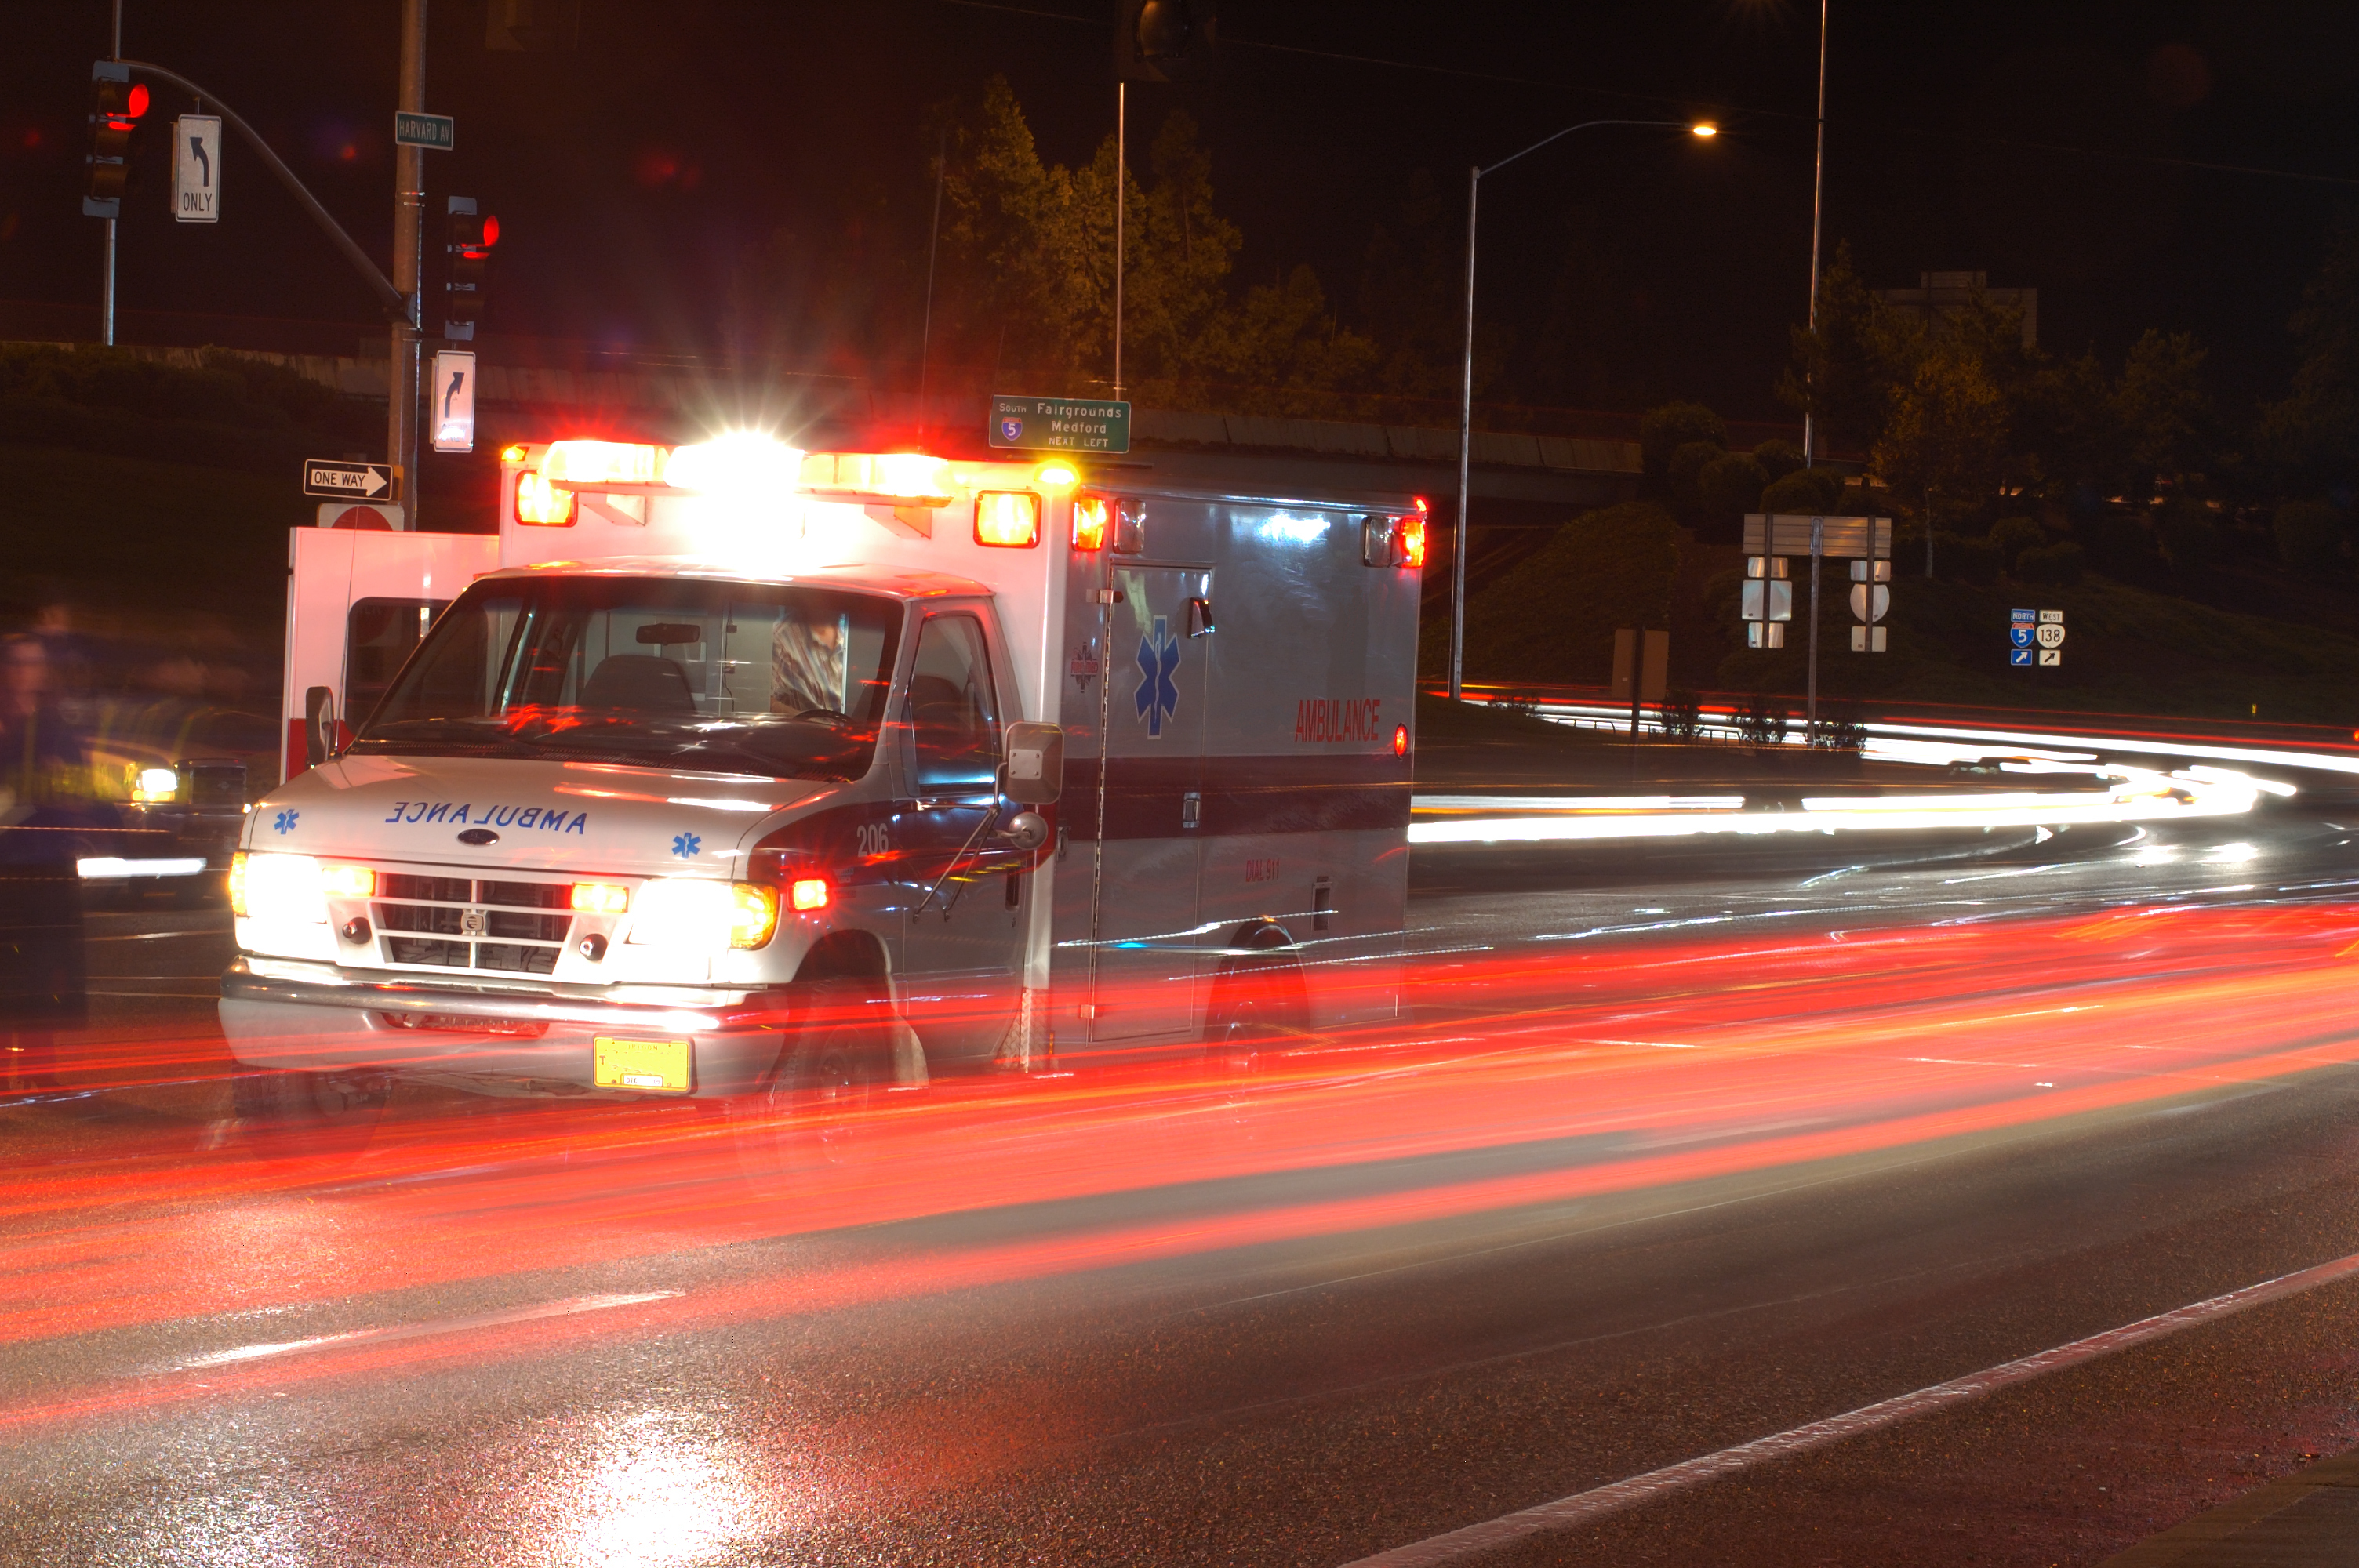 Ambulance standing in night traffic | Source: Shutterstock